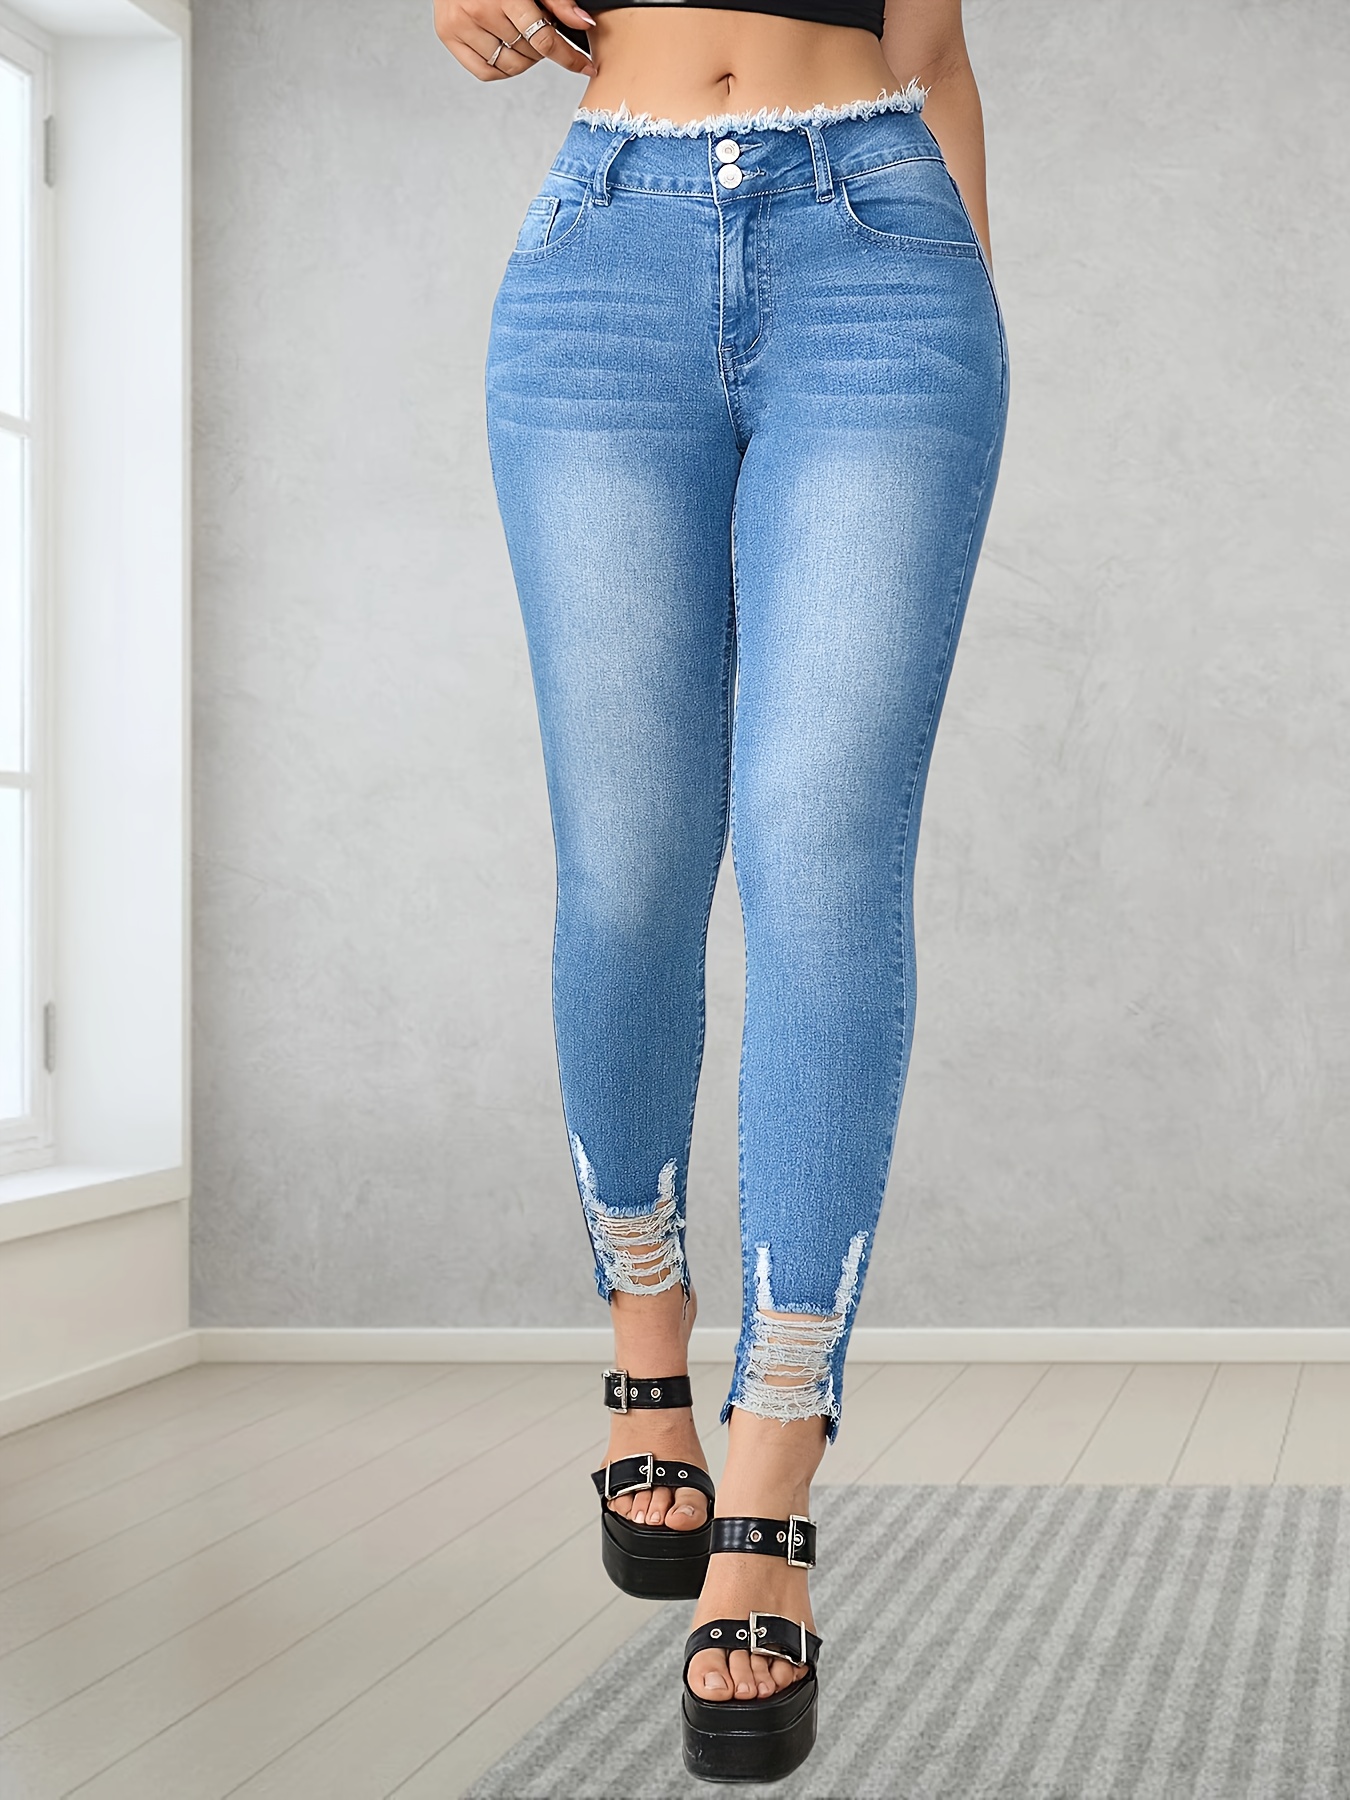 Redbat High Rise Super Skinny Jeans Blue Light Wash Womens Size 14